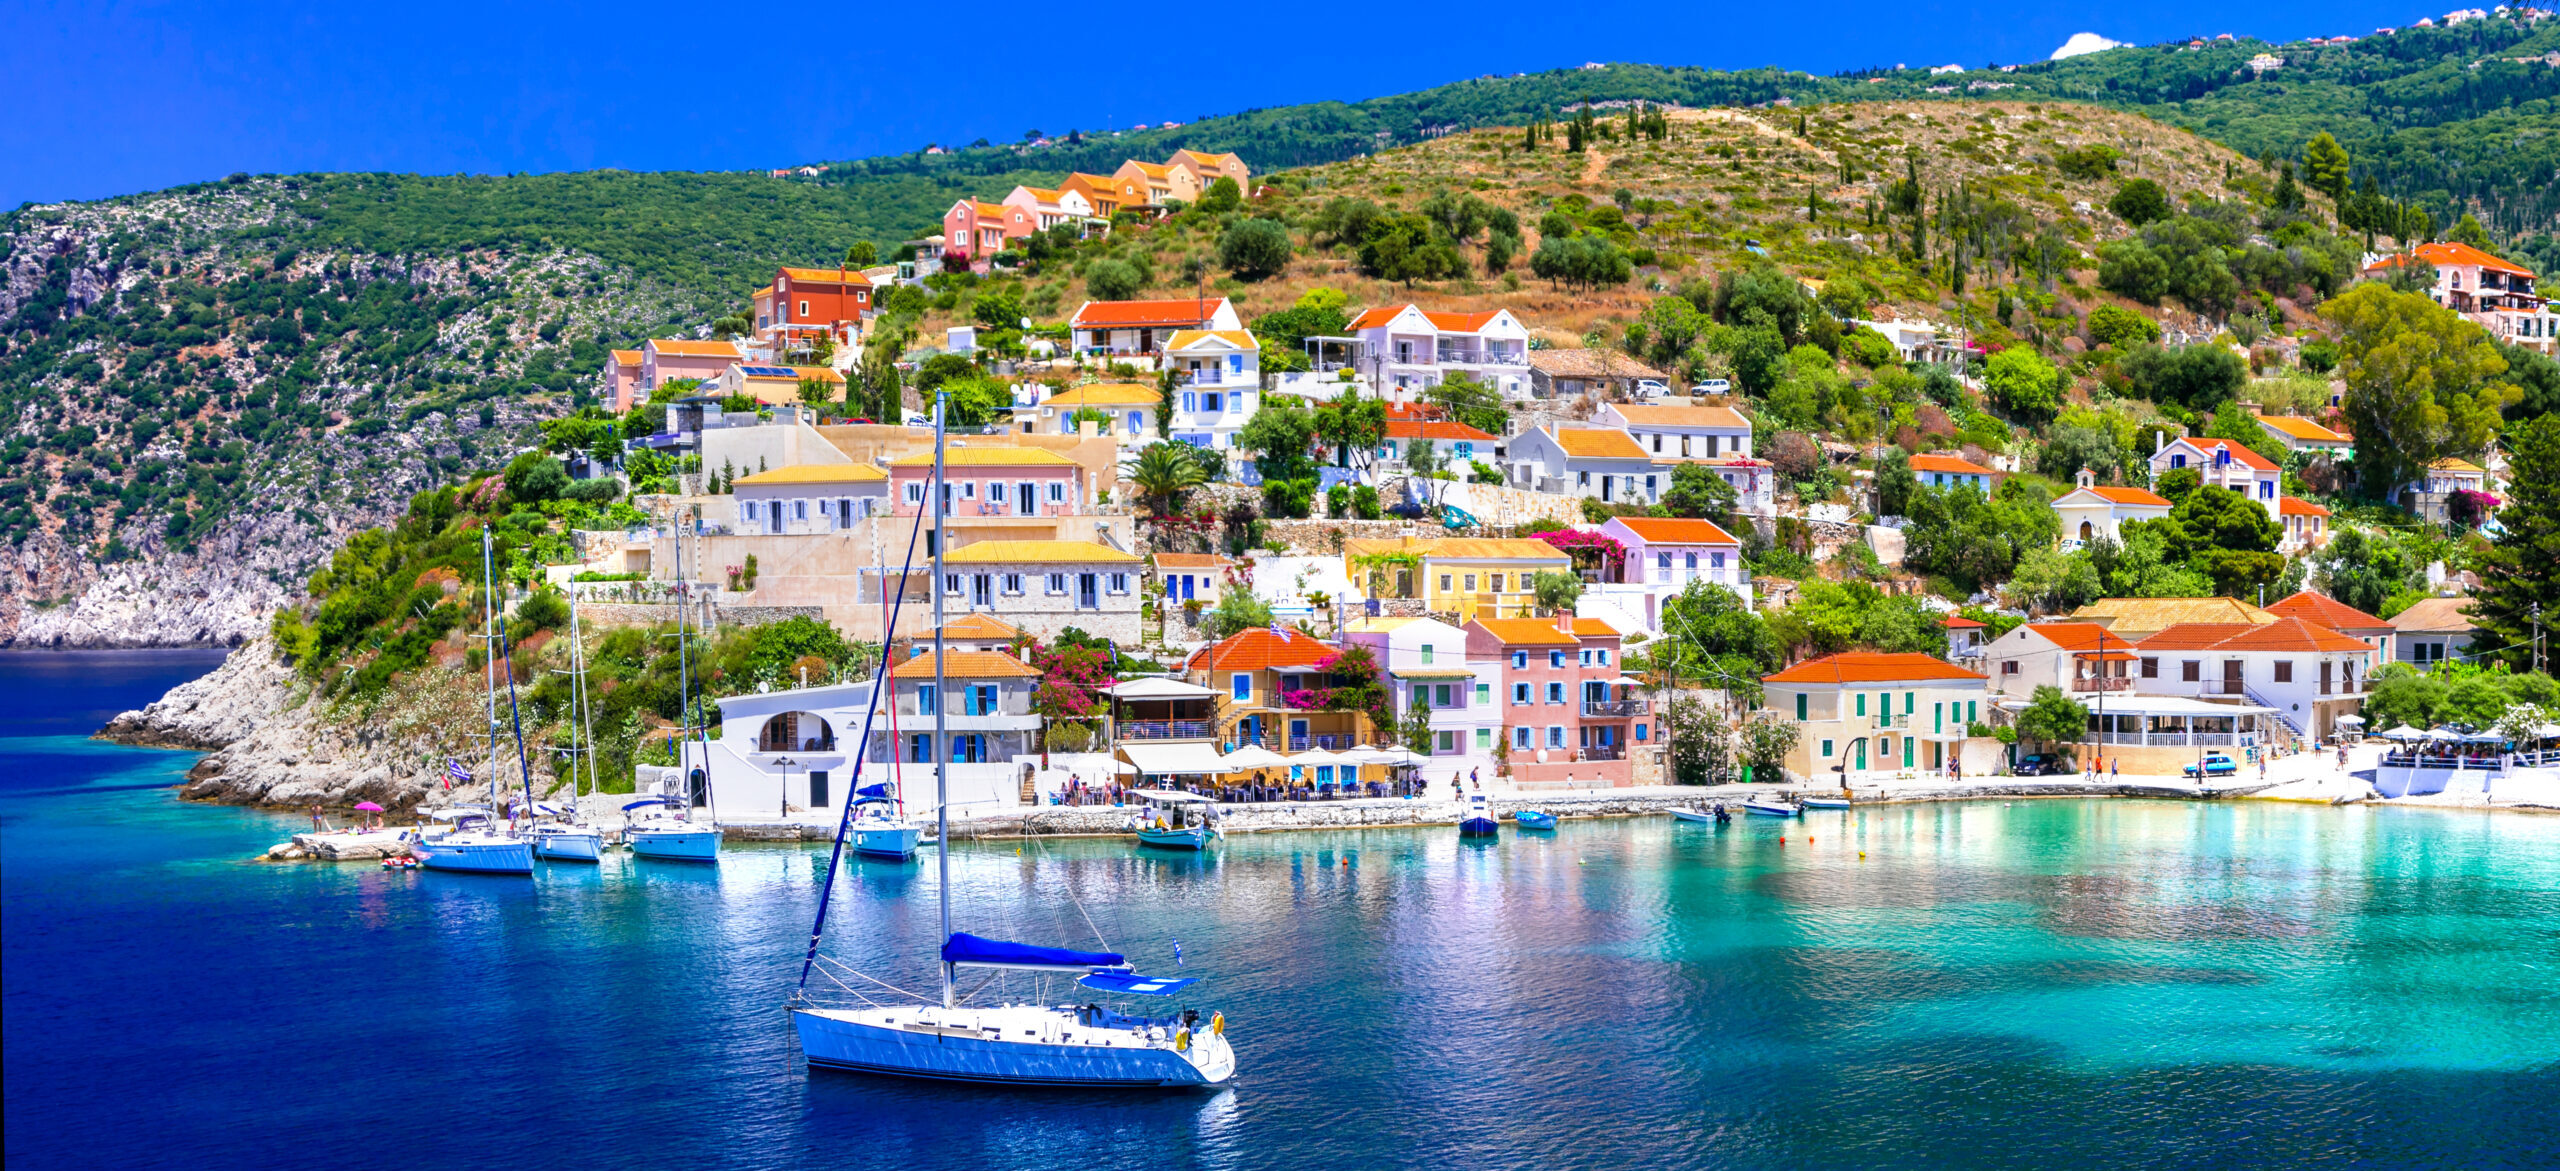 Assos village Mediterranean Sea, Greece. Summer vacation on Greek